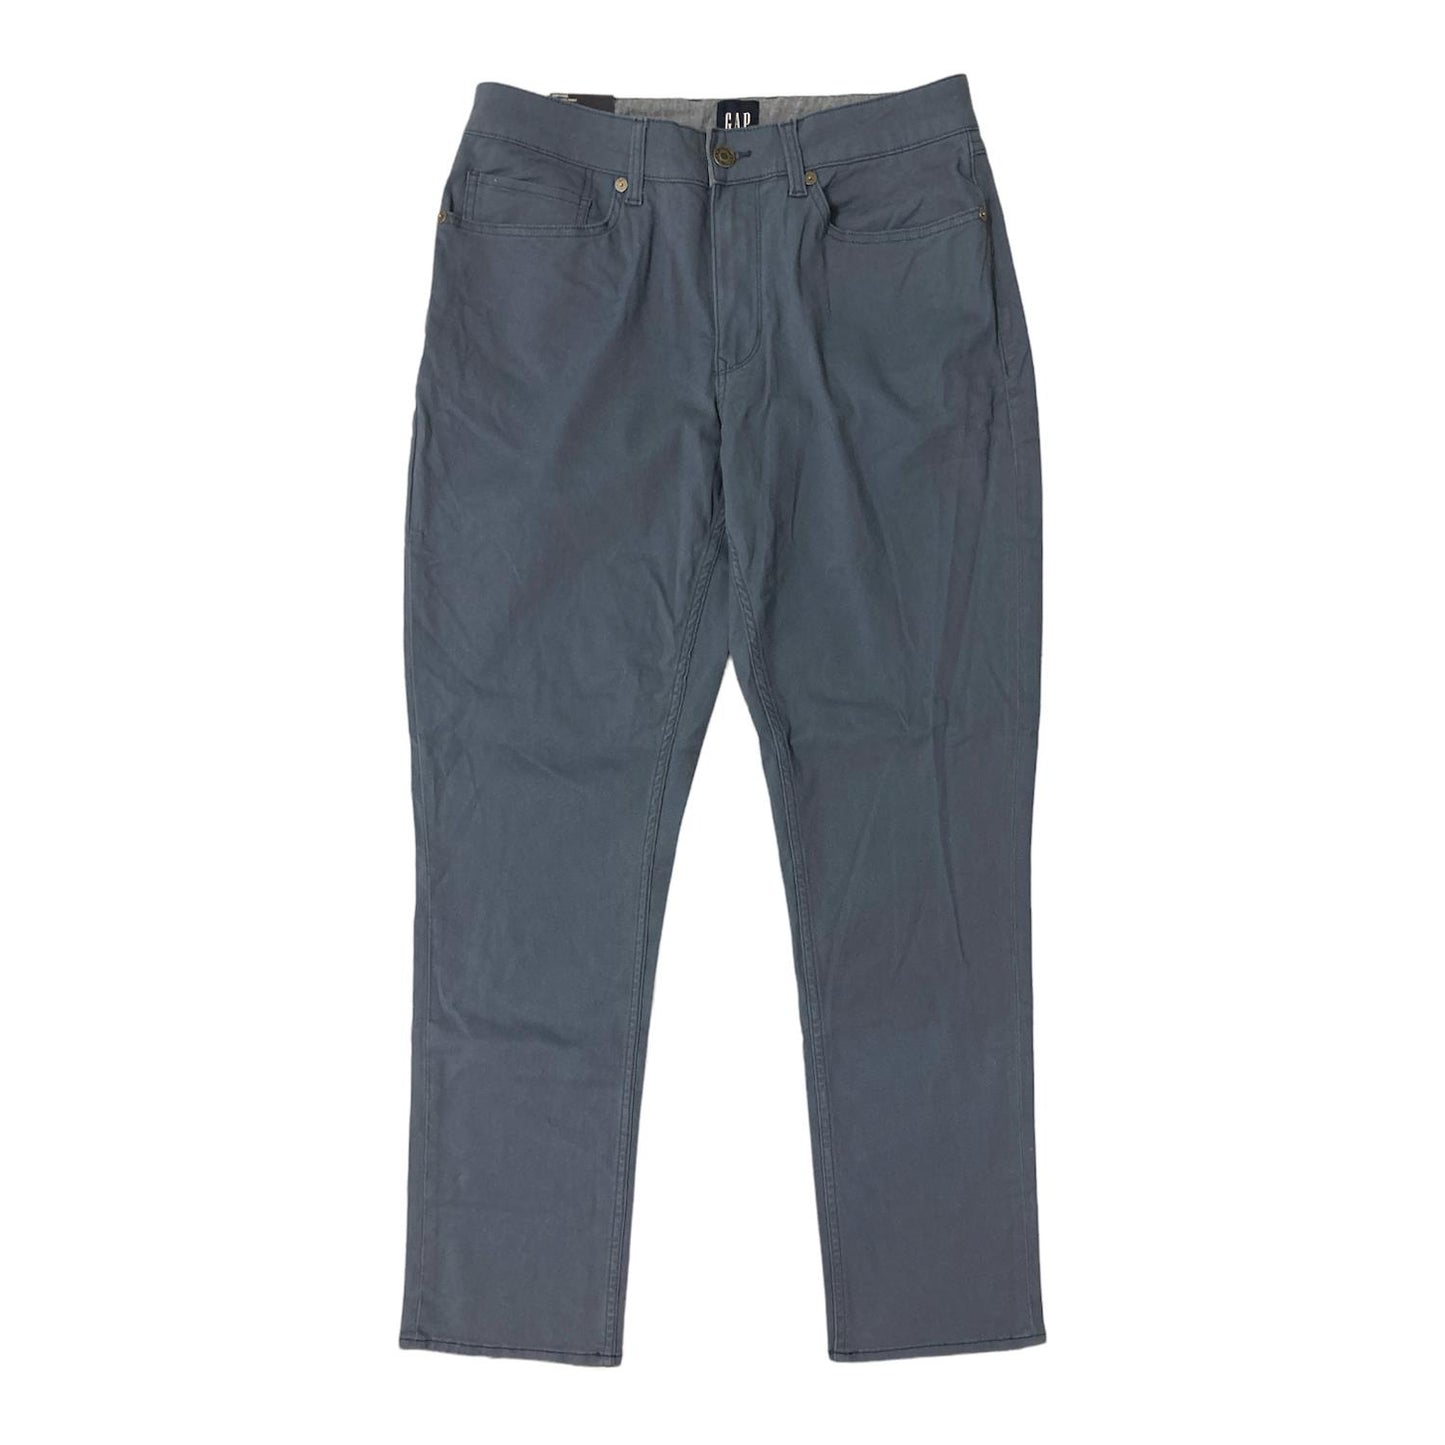 GAP Men's Super Soft Stretch Twill 5 Pocket Slim Fit Pants